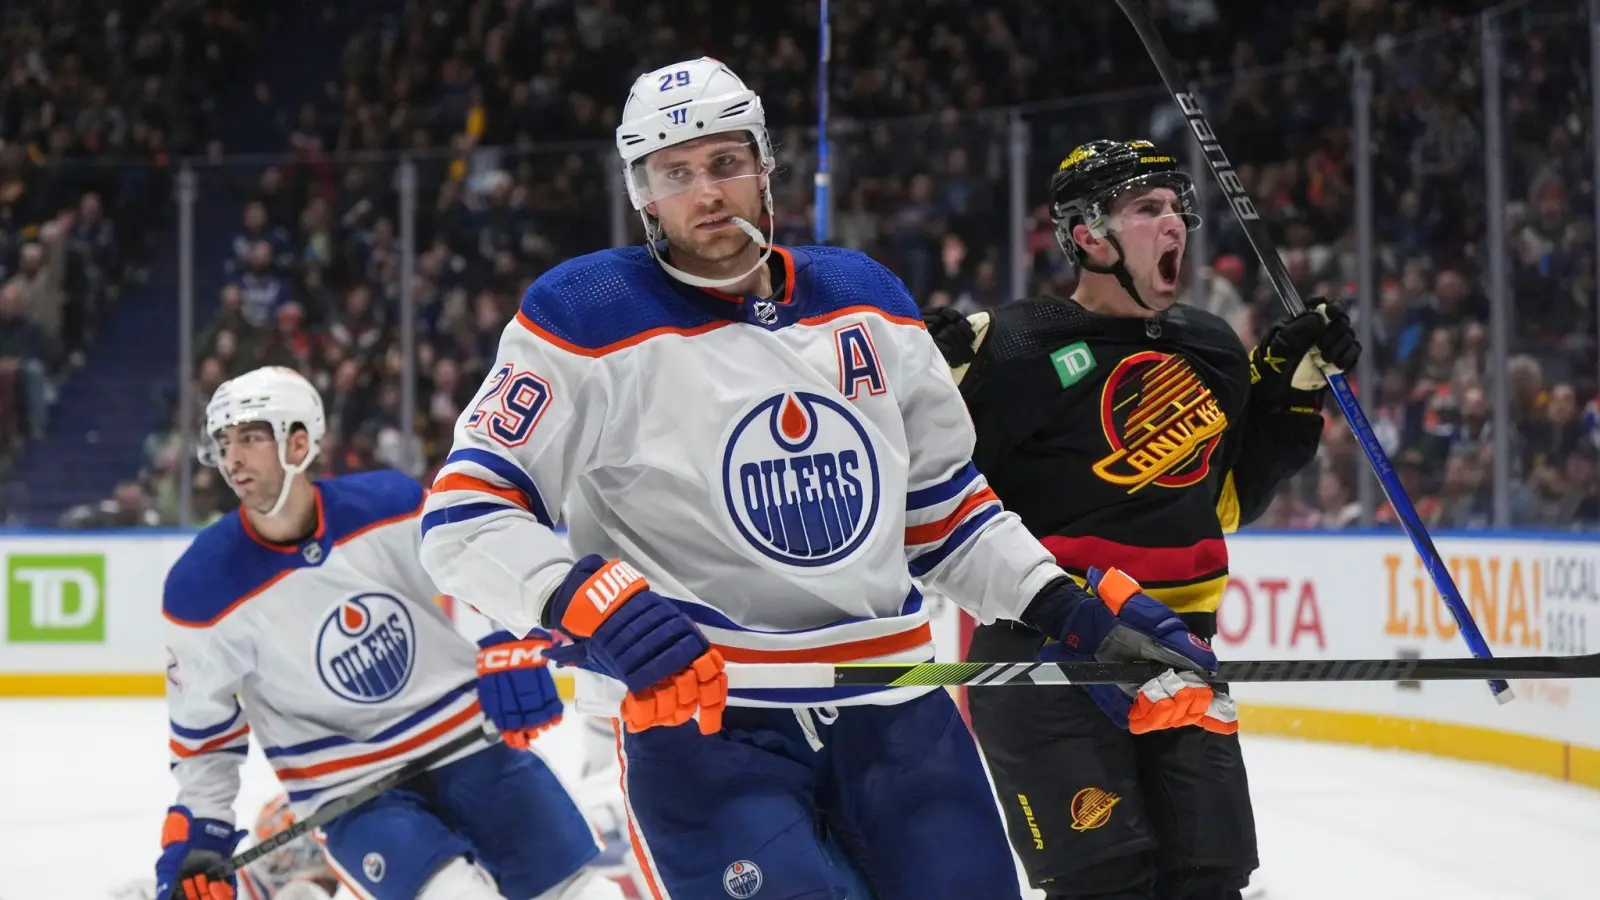 Edmontons Leon Draisaitl machte gegen die Ducks ein starkes Spiel. (Foto: DARRYL DYCK/The Canadian Press/AP/dpa)